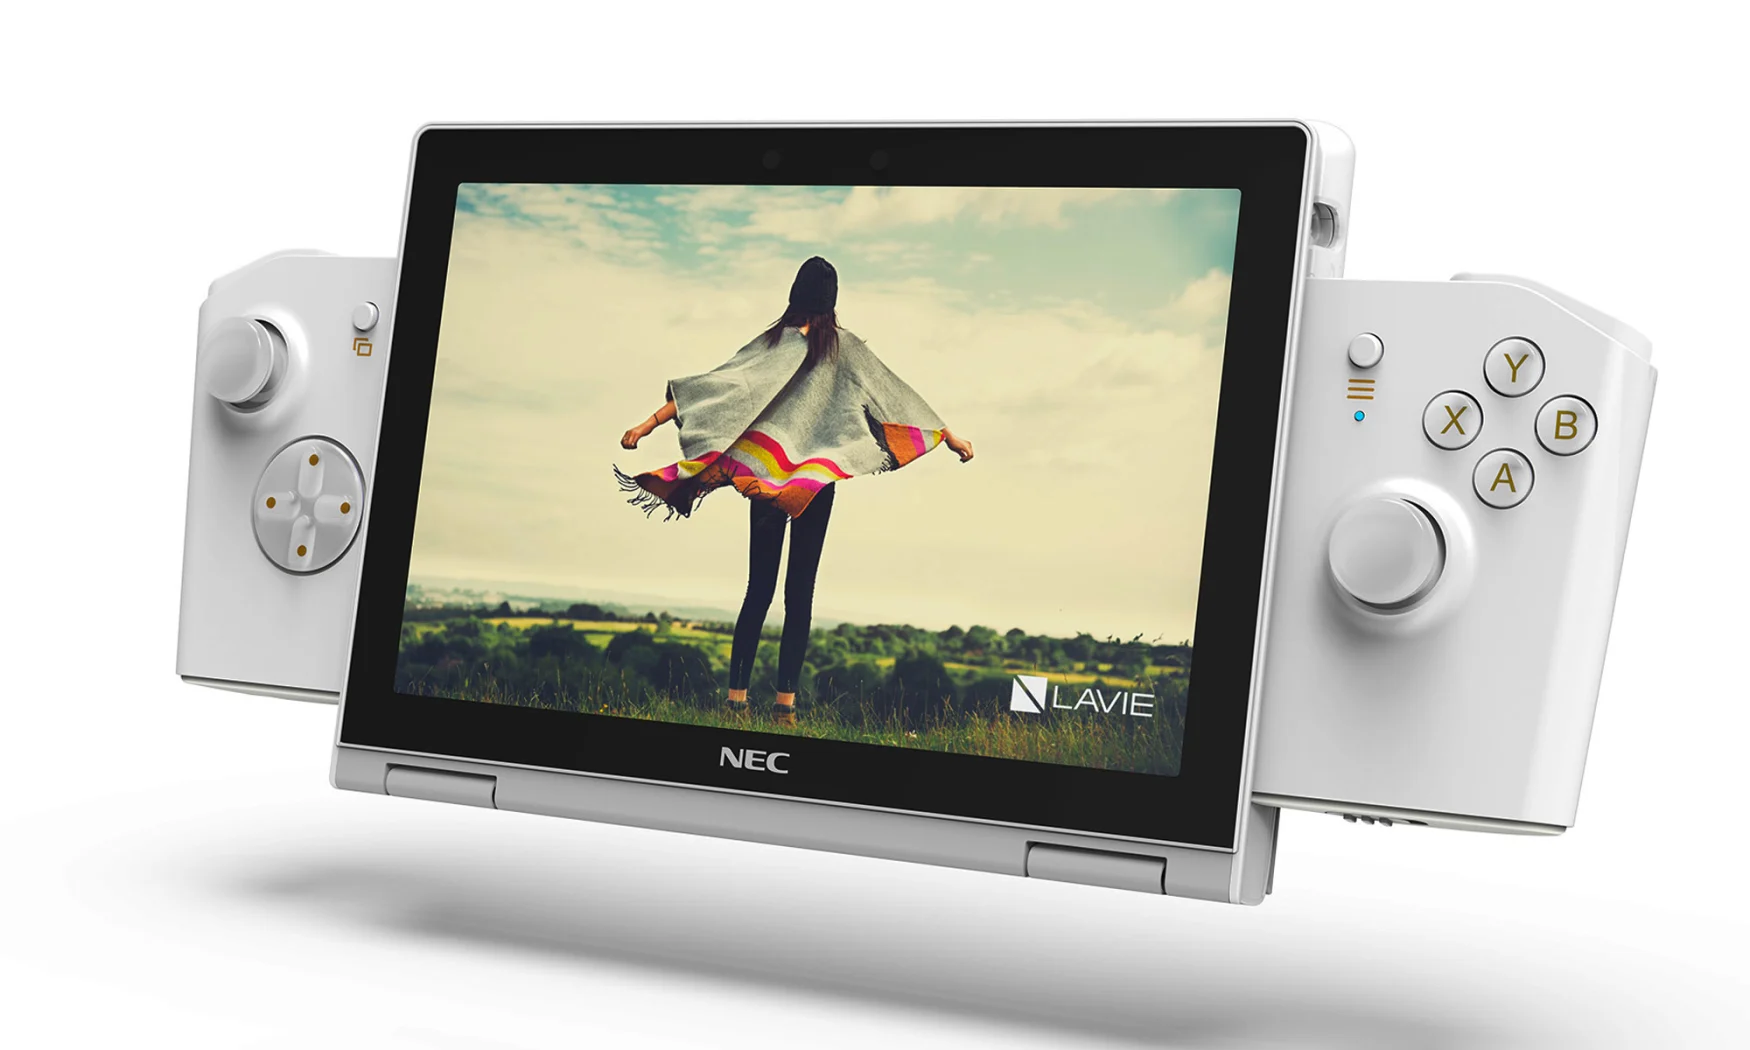 Lenovo NEC Lavie Mini concept gaming PC.